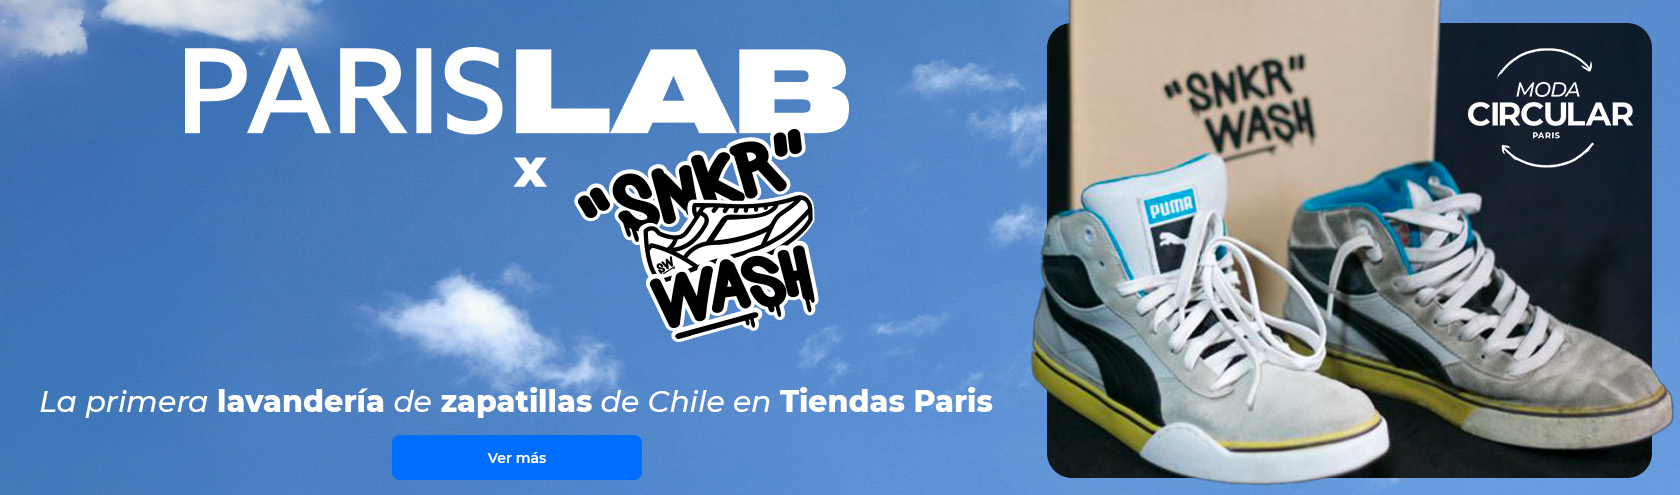 ParisLab x Snkr Wash